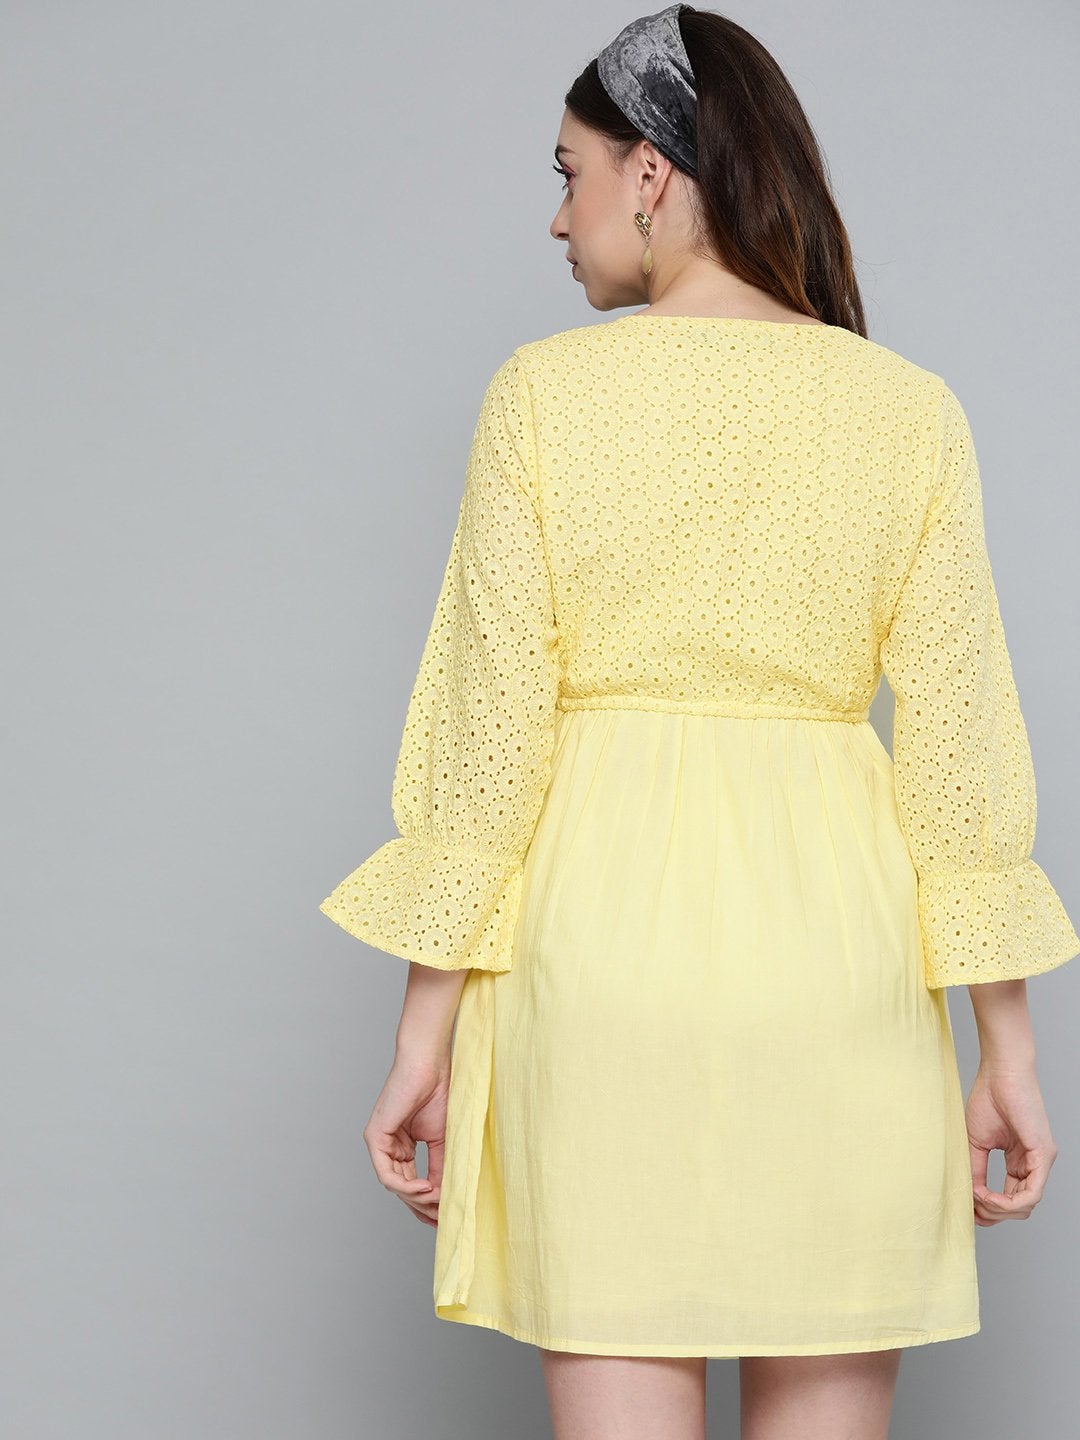 Women's Lemon Yellow Schiffli Shift Dress - SASSAFRAS